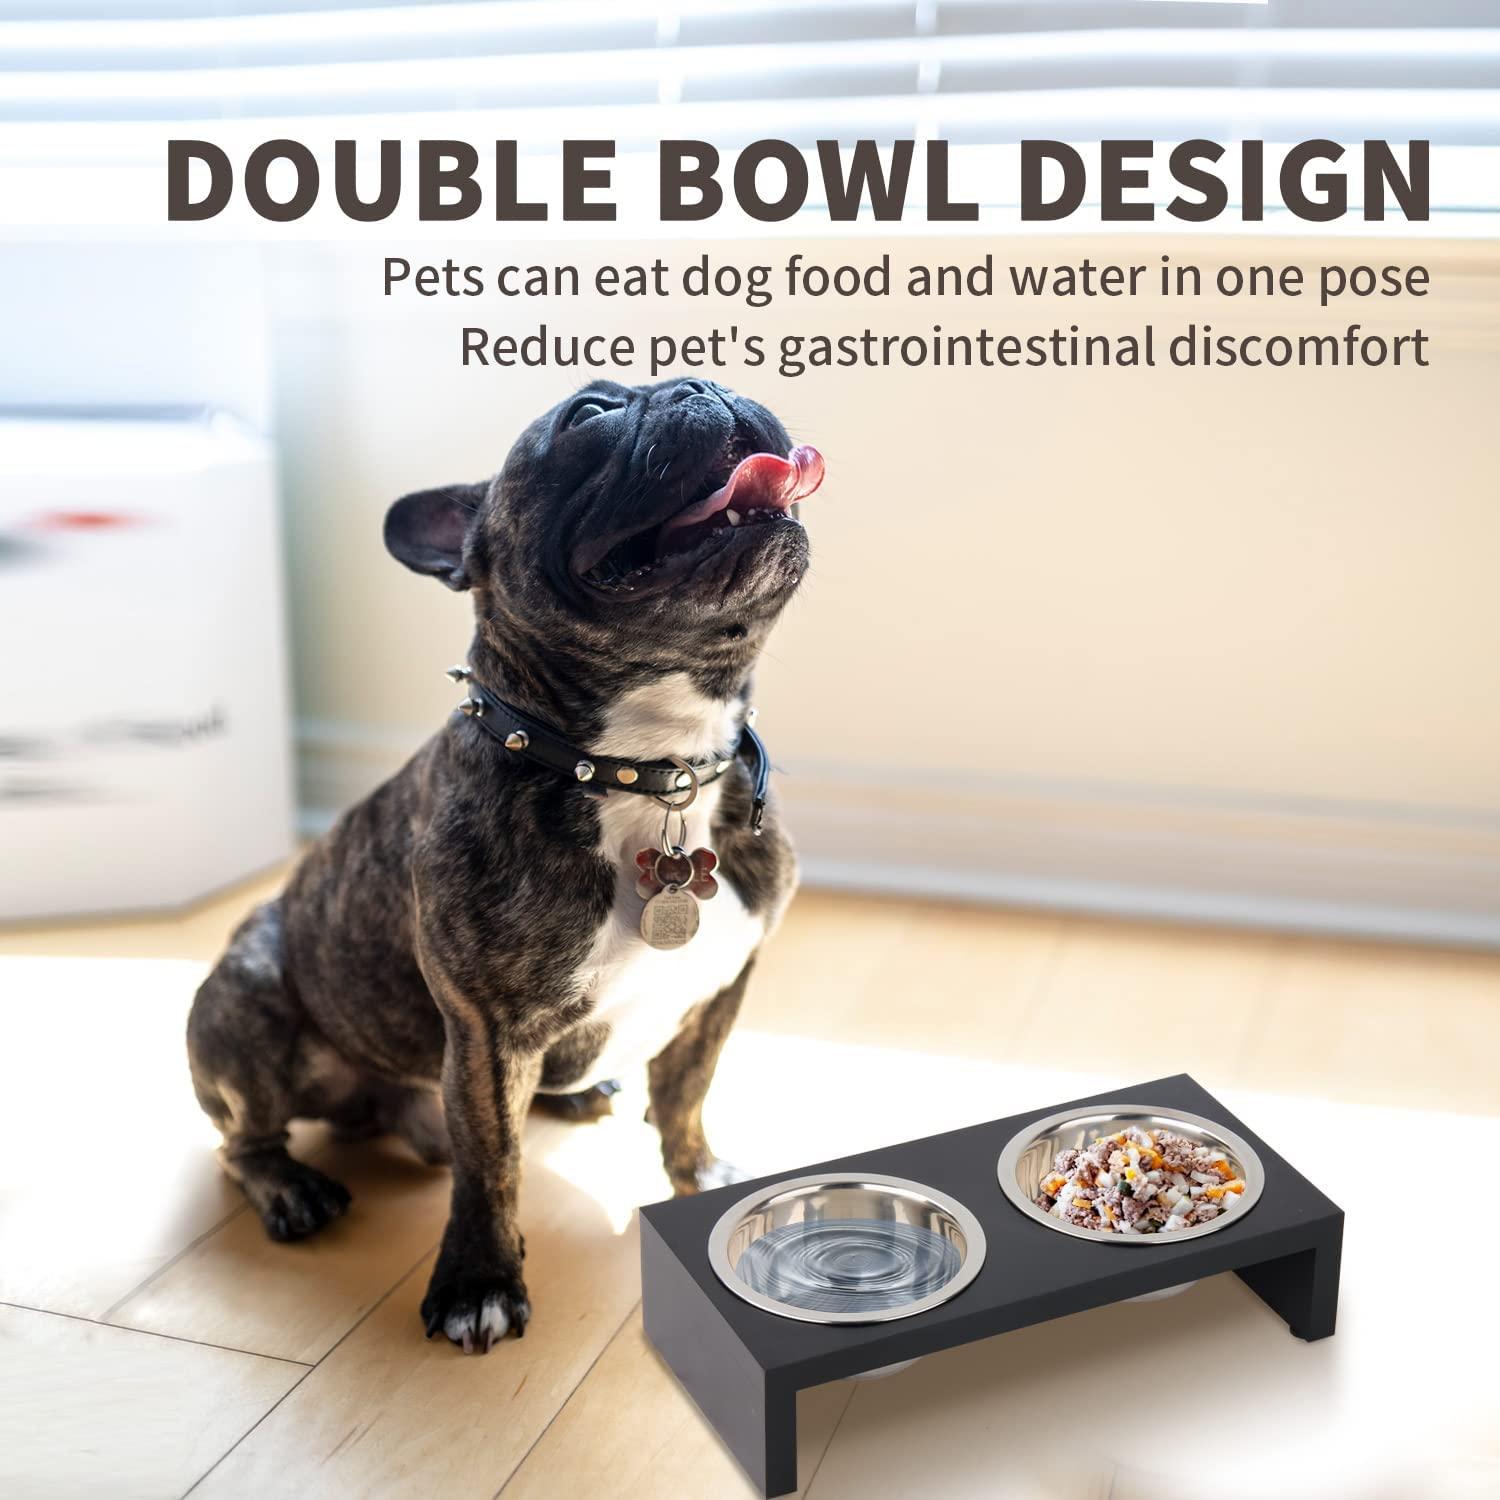 PAWISE Elevated Pet Feeder, Raised Dog Feeder Stainless Steel Bowl